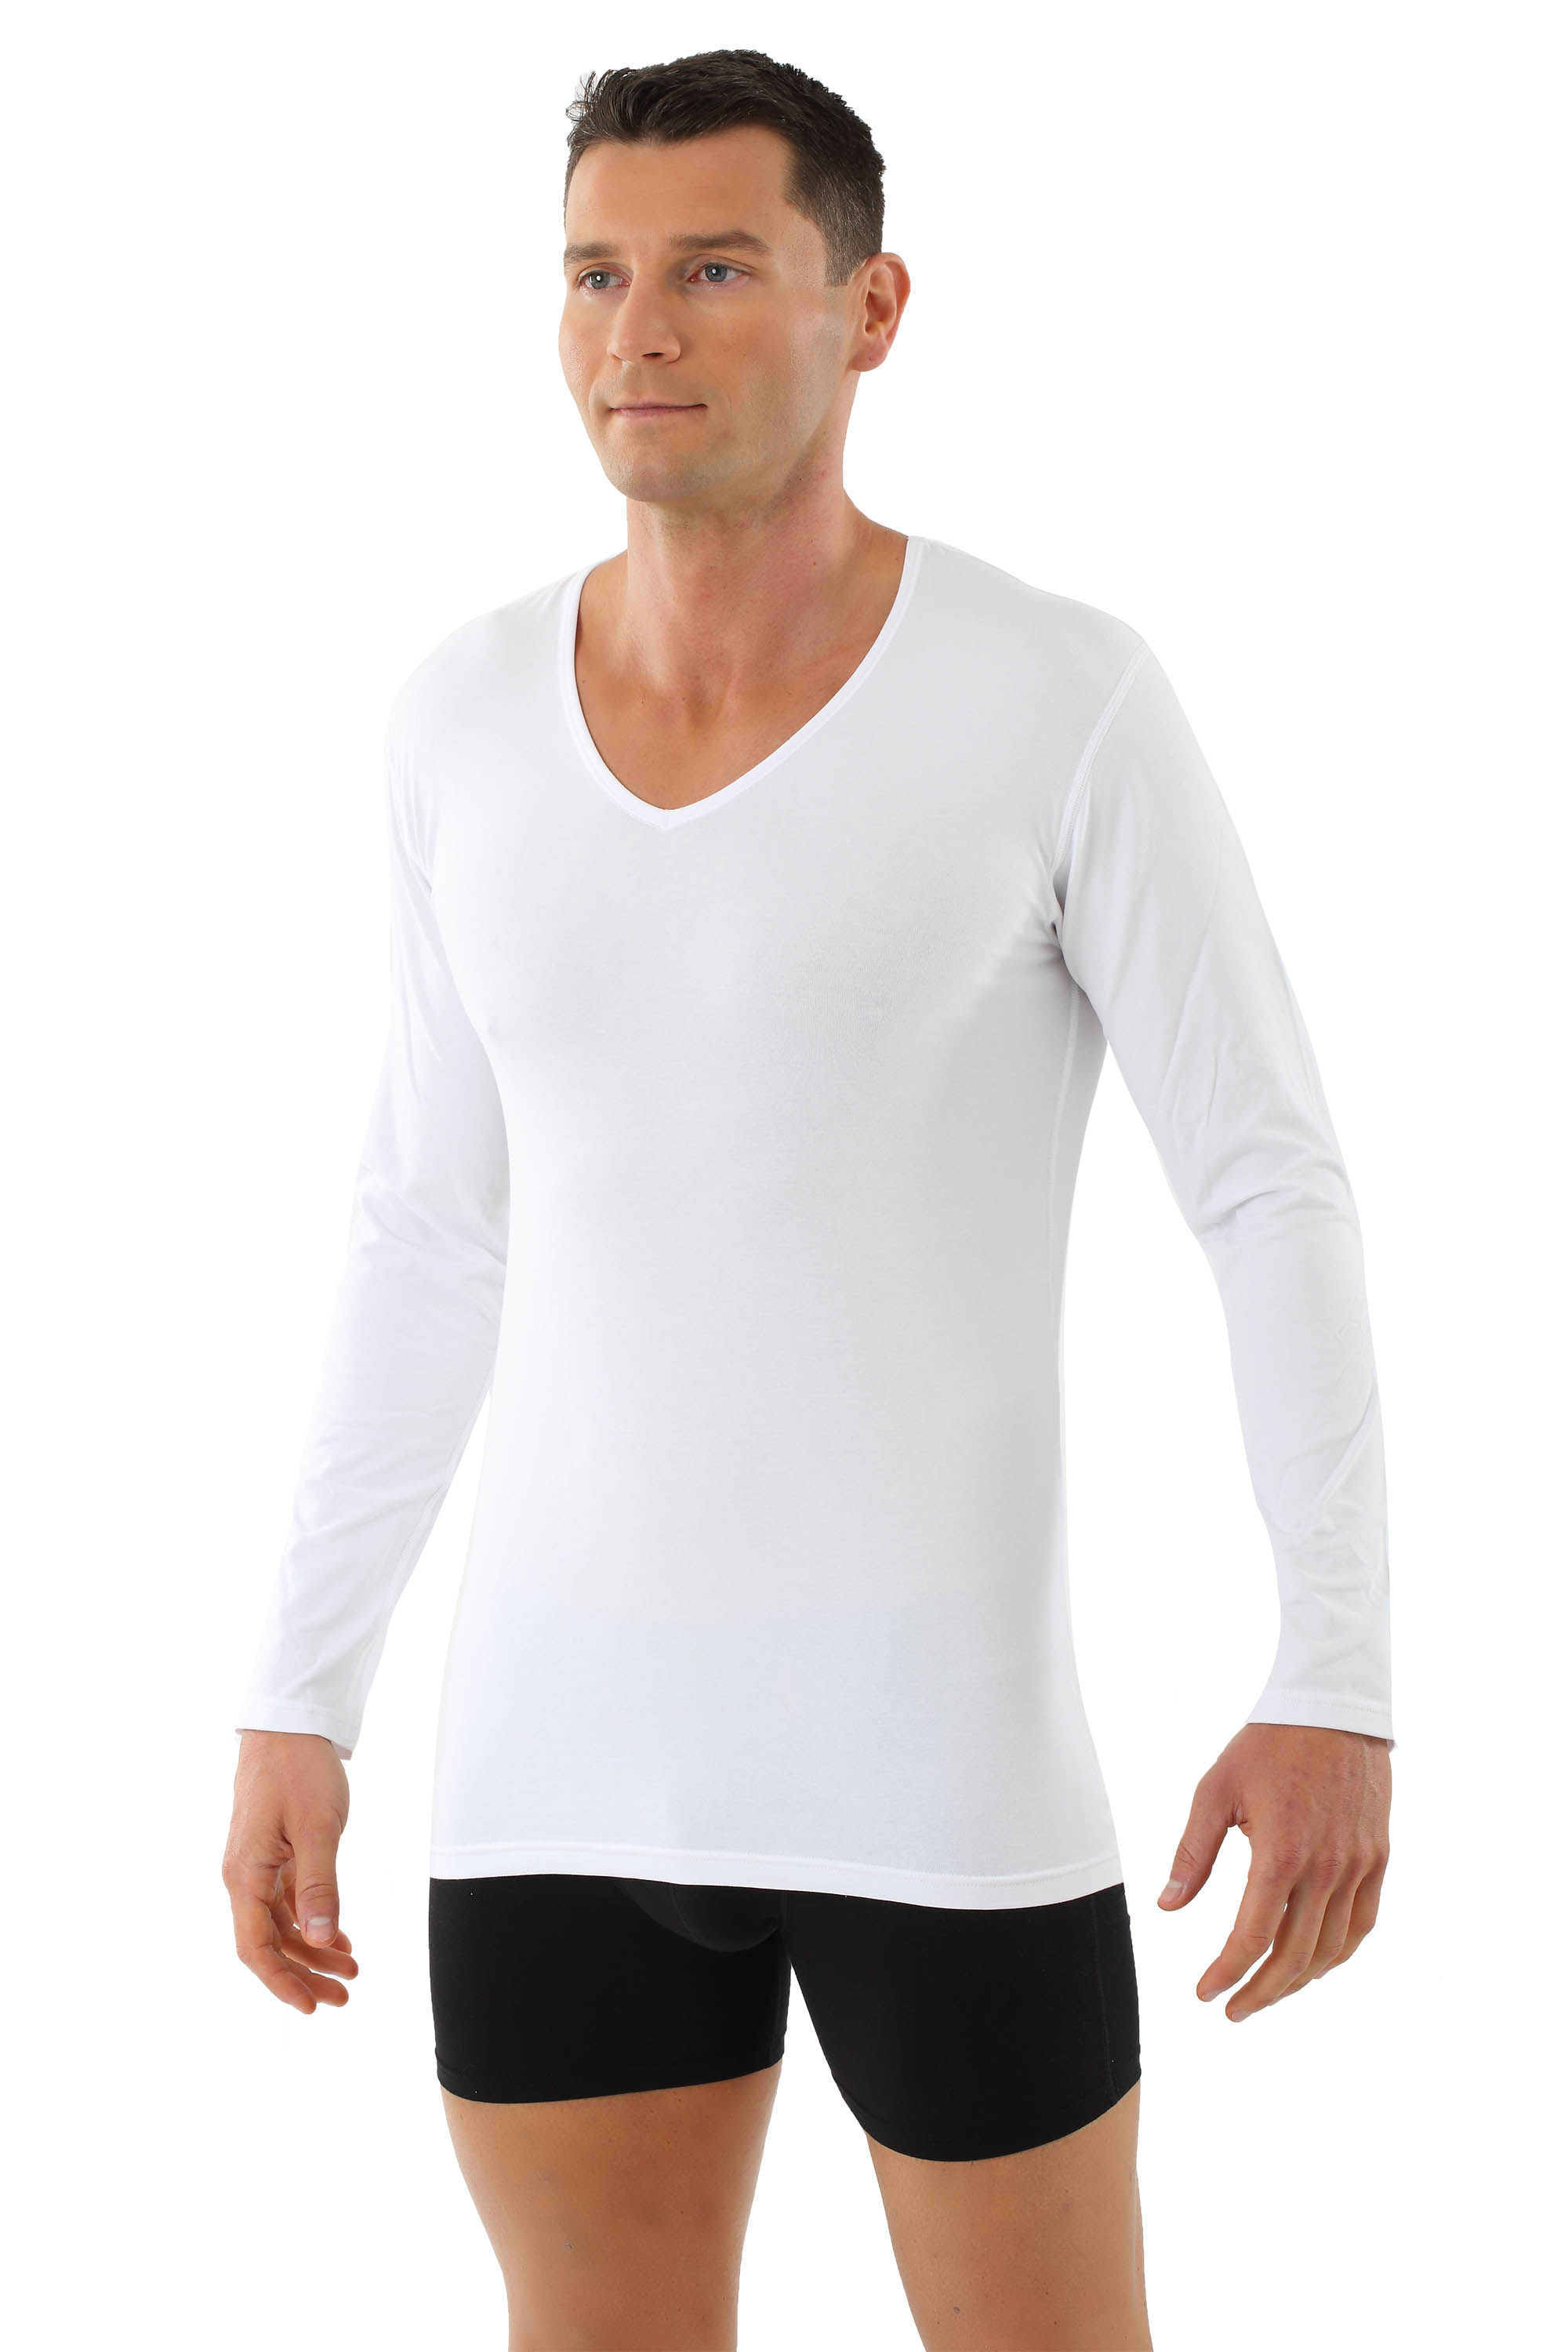 ALBERT KREUZ  Men's long sleeve undershirt with v-neck organic